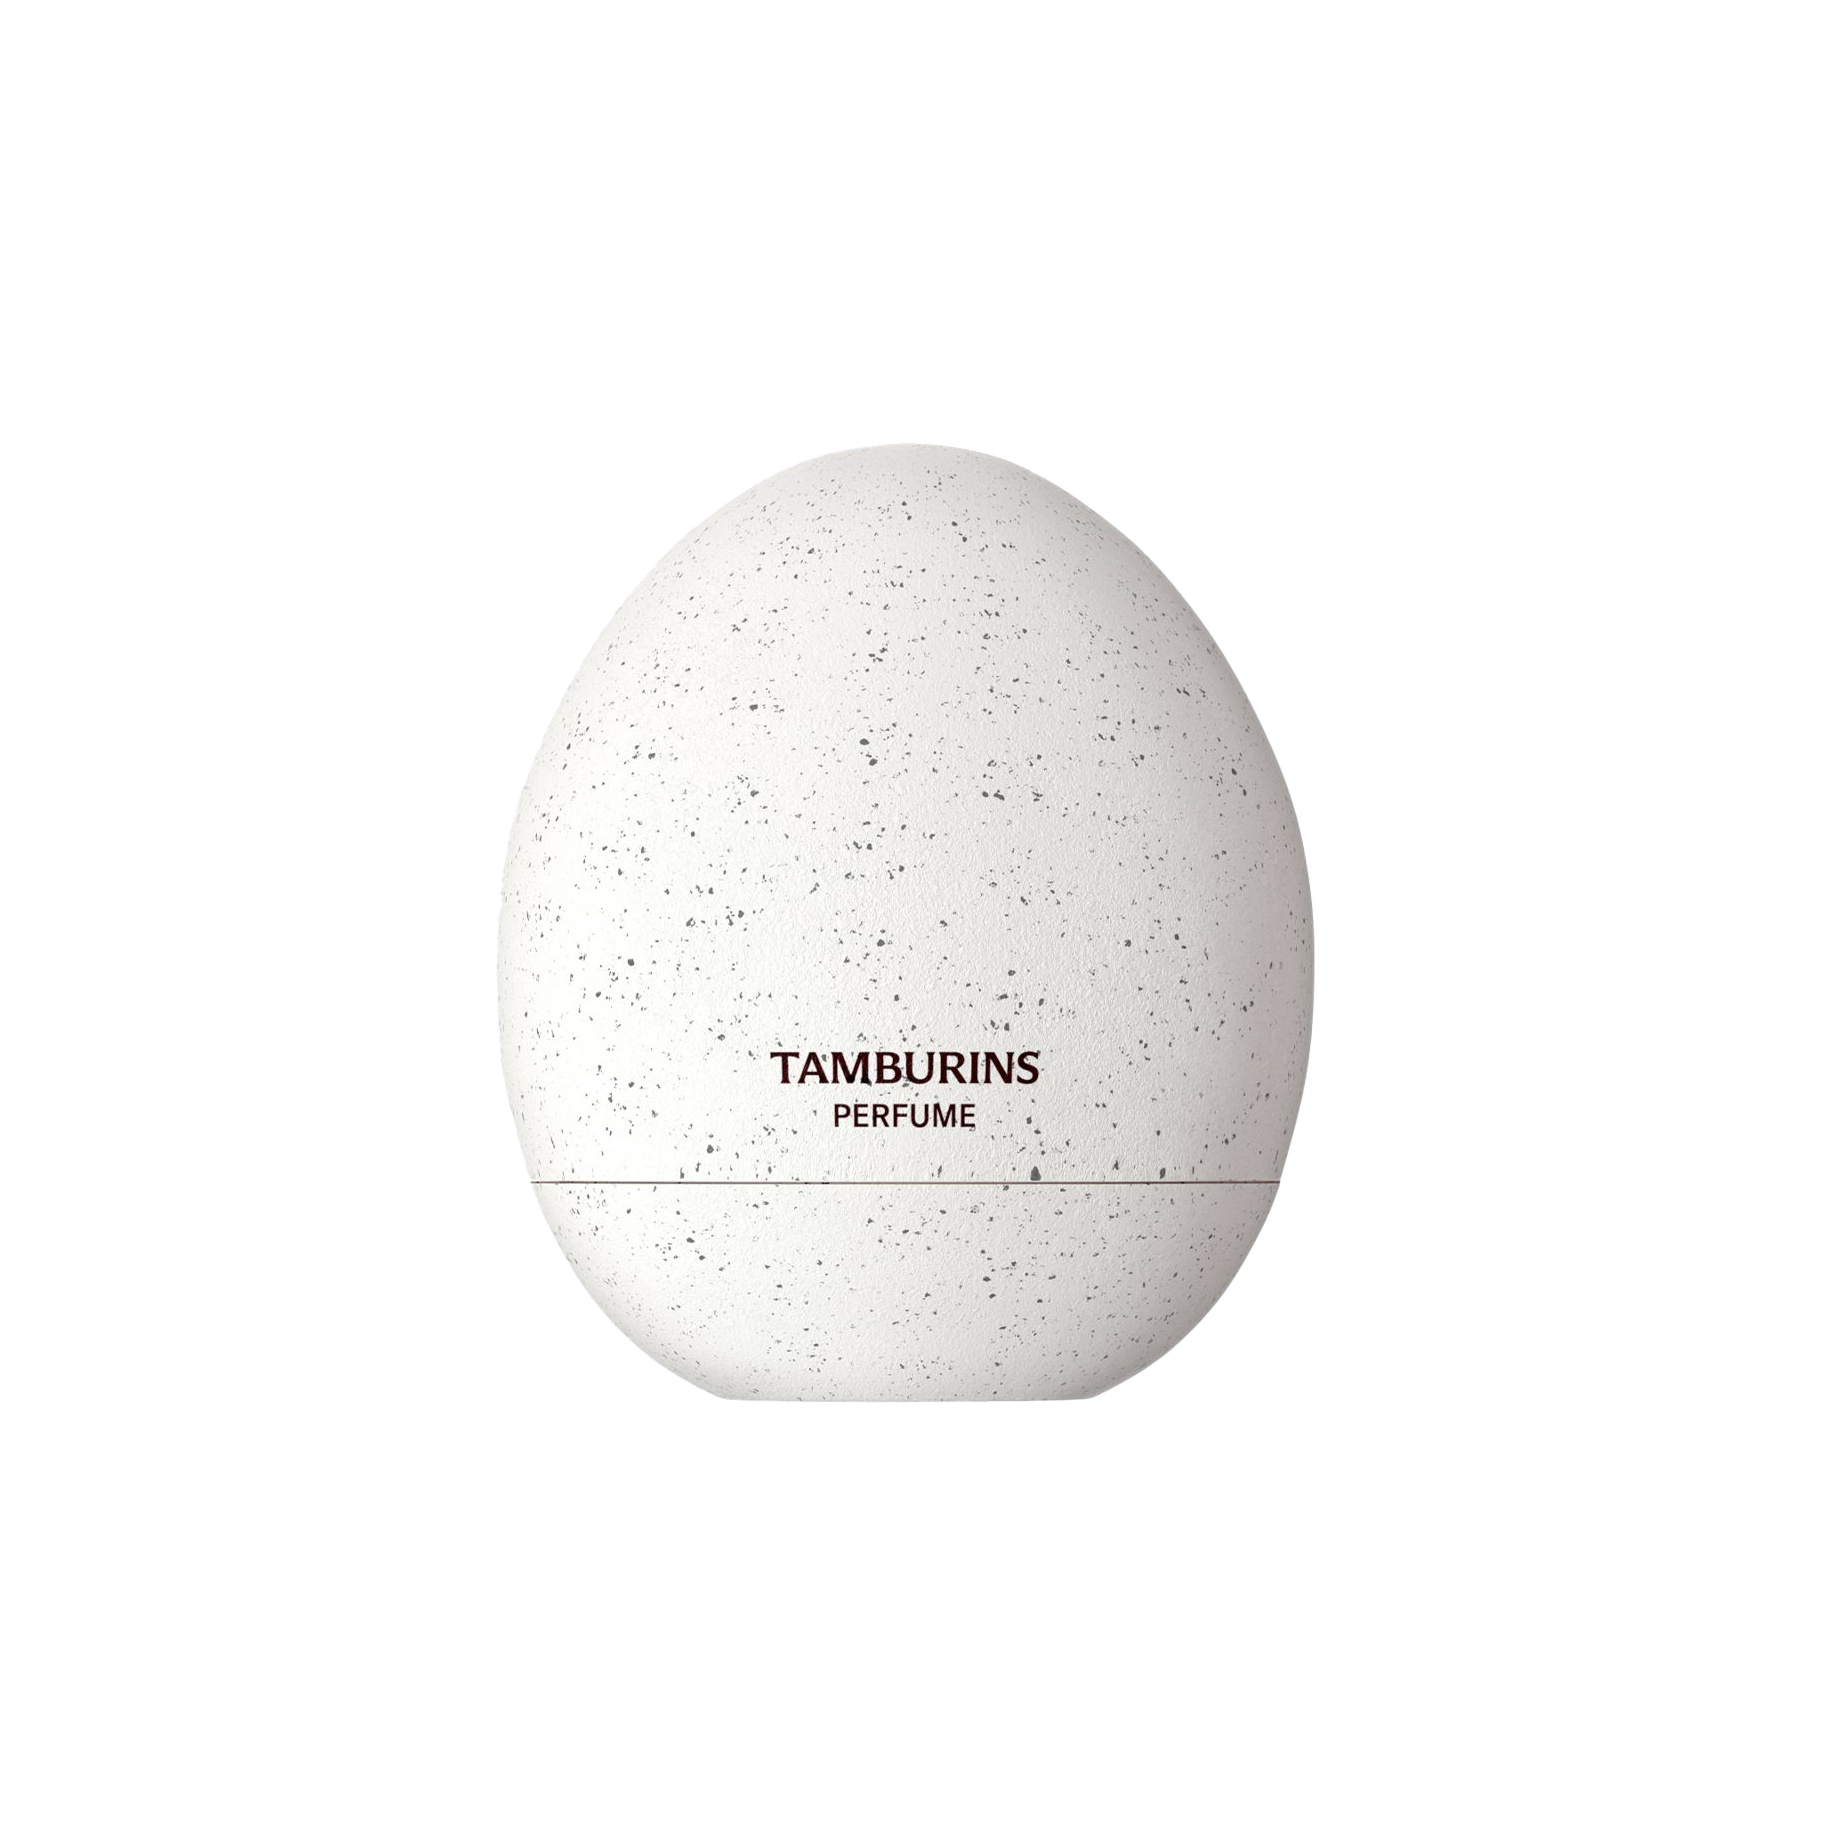 14ml TAMBURINS The Egg Perfume featuring 4 distinct fragrances.